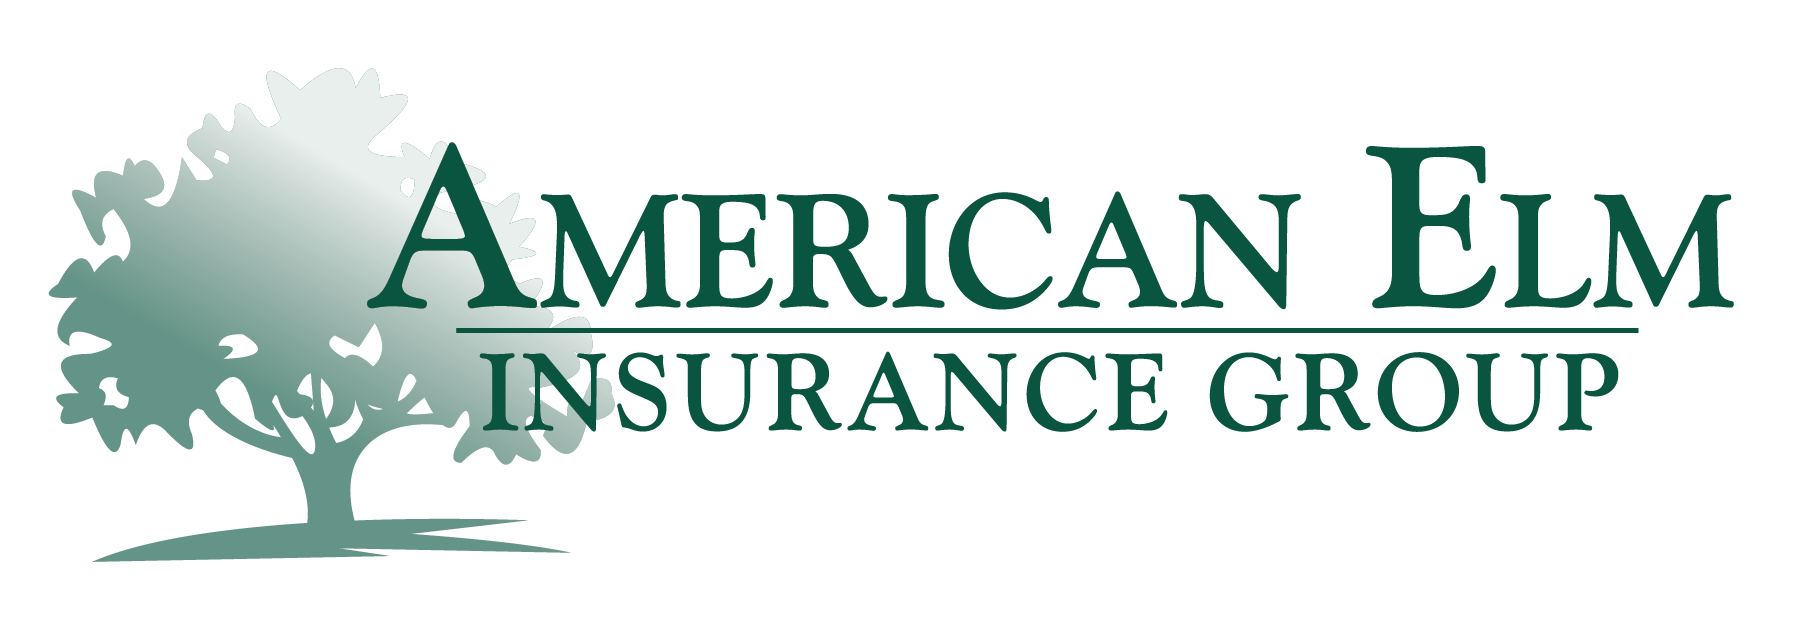 American Elm Insurance Group_Logo_RGB